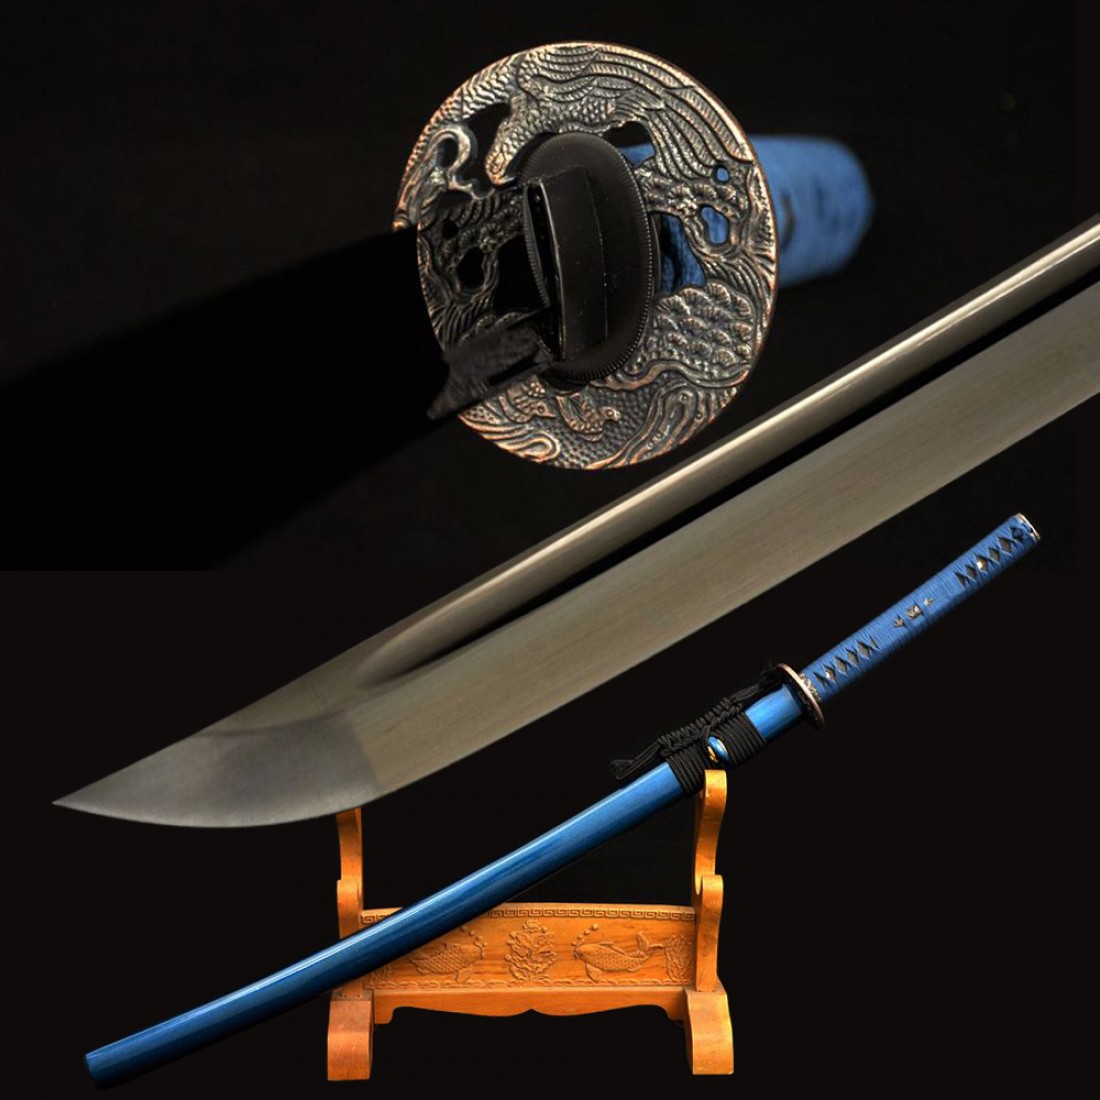 Клинок готов. Катана с 1060 High Carbon Steel. Handmade Japanese Katana Sword with Black Blade and Dragon Tsuba. Японский кузнец самурайских мечей. Катана на изготовке.